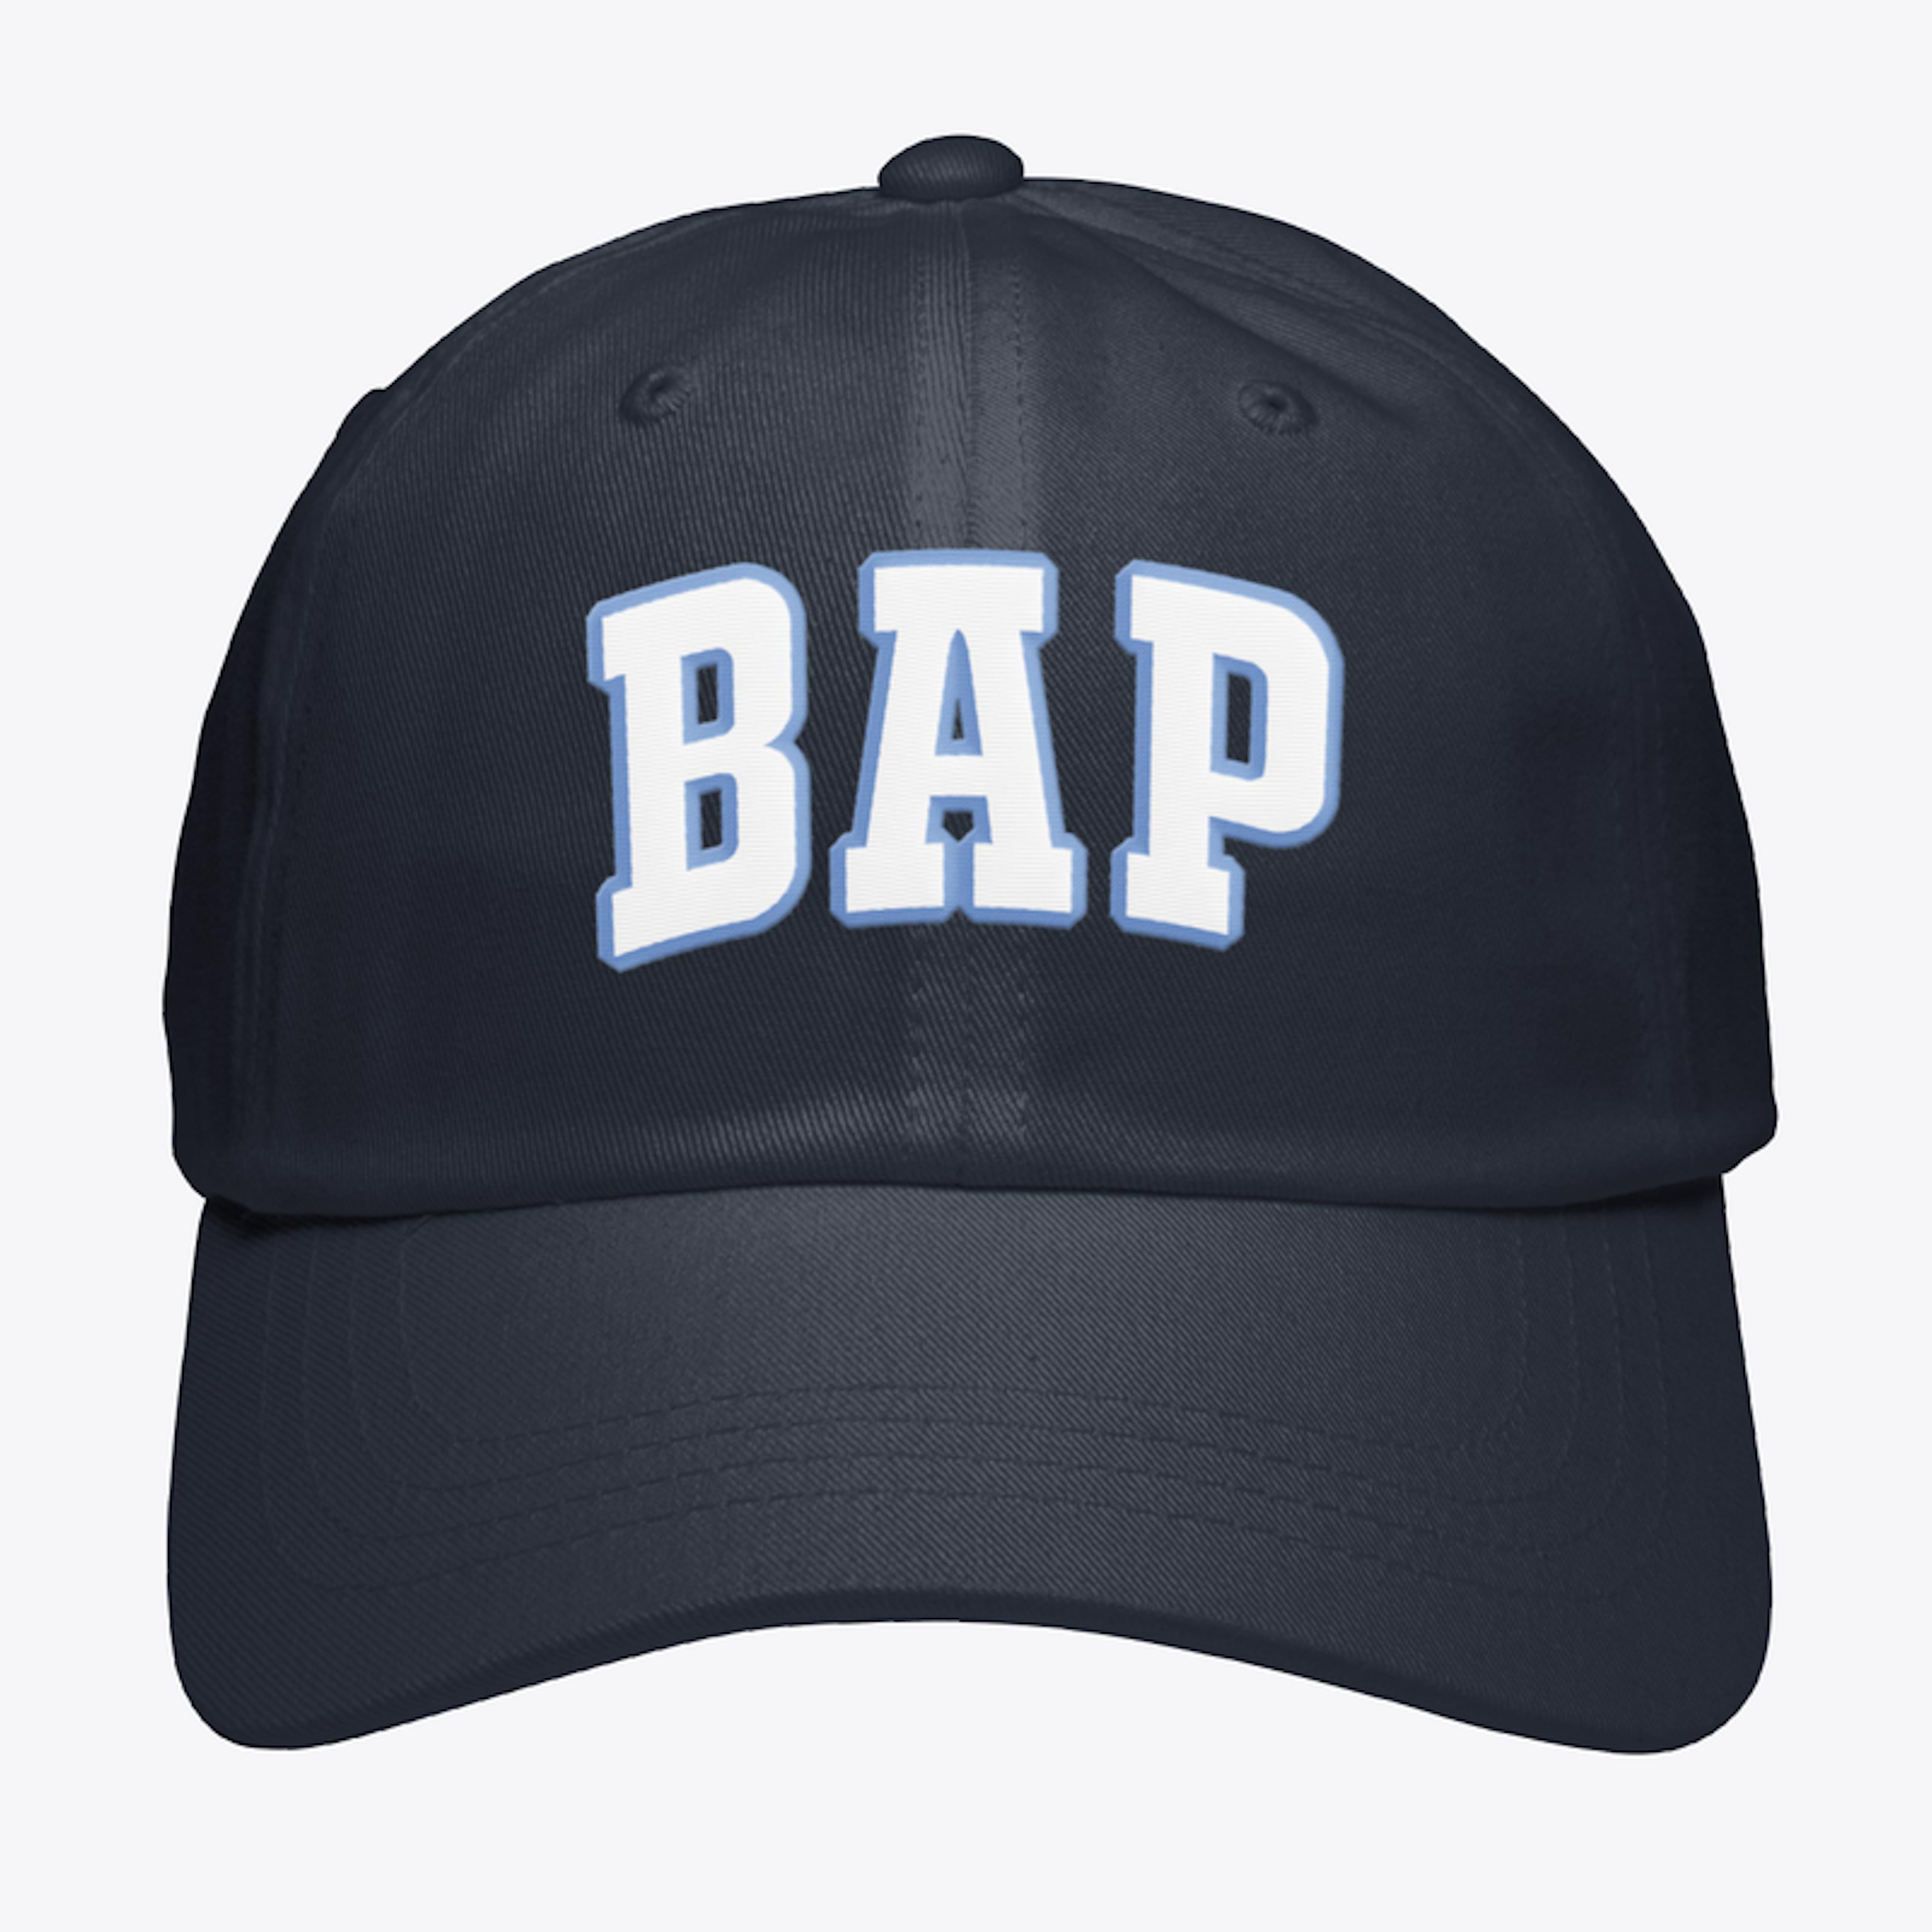 Bap Cap